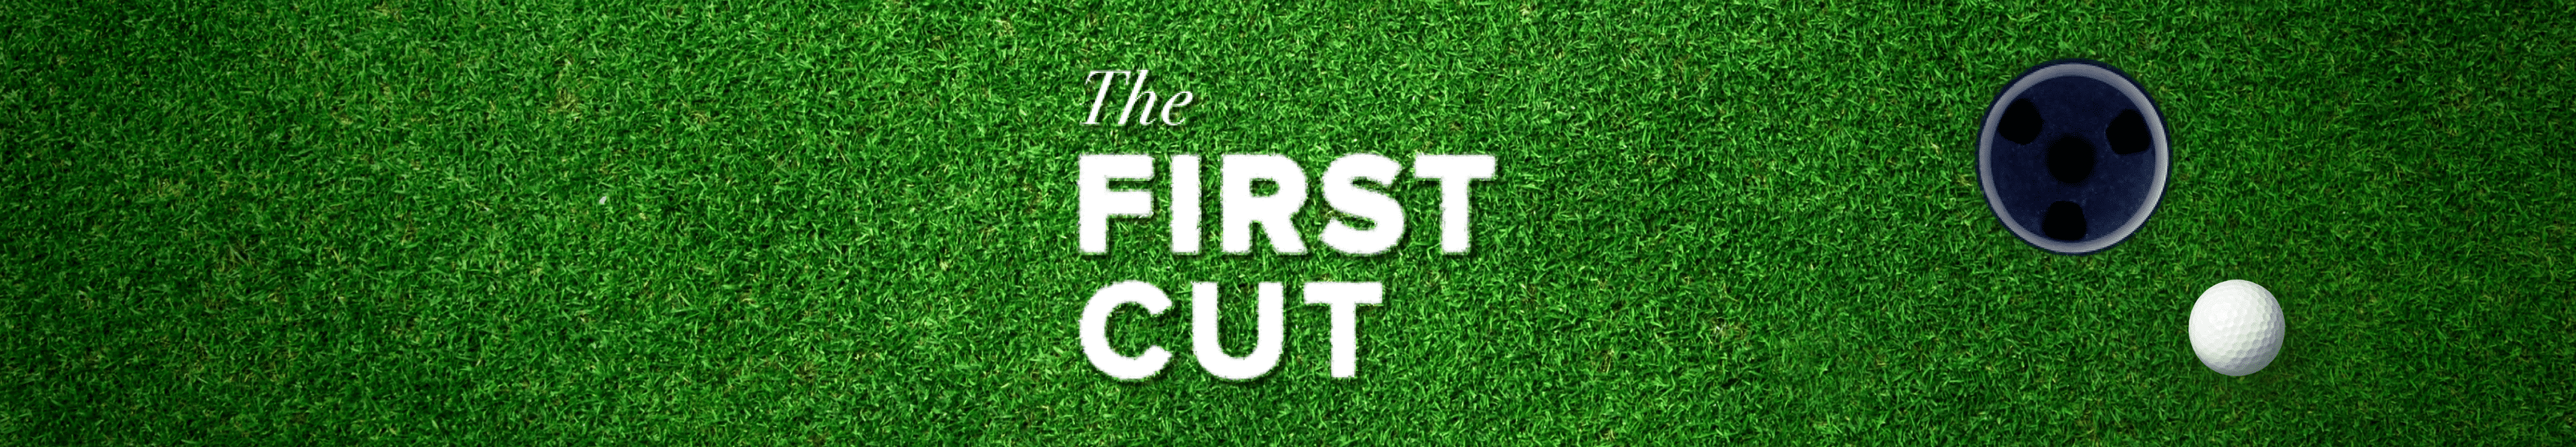 First Cut Golf